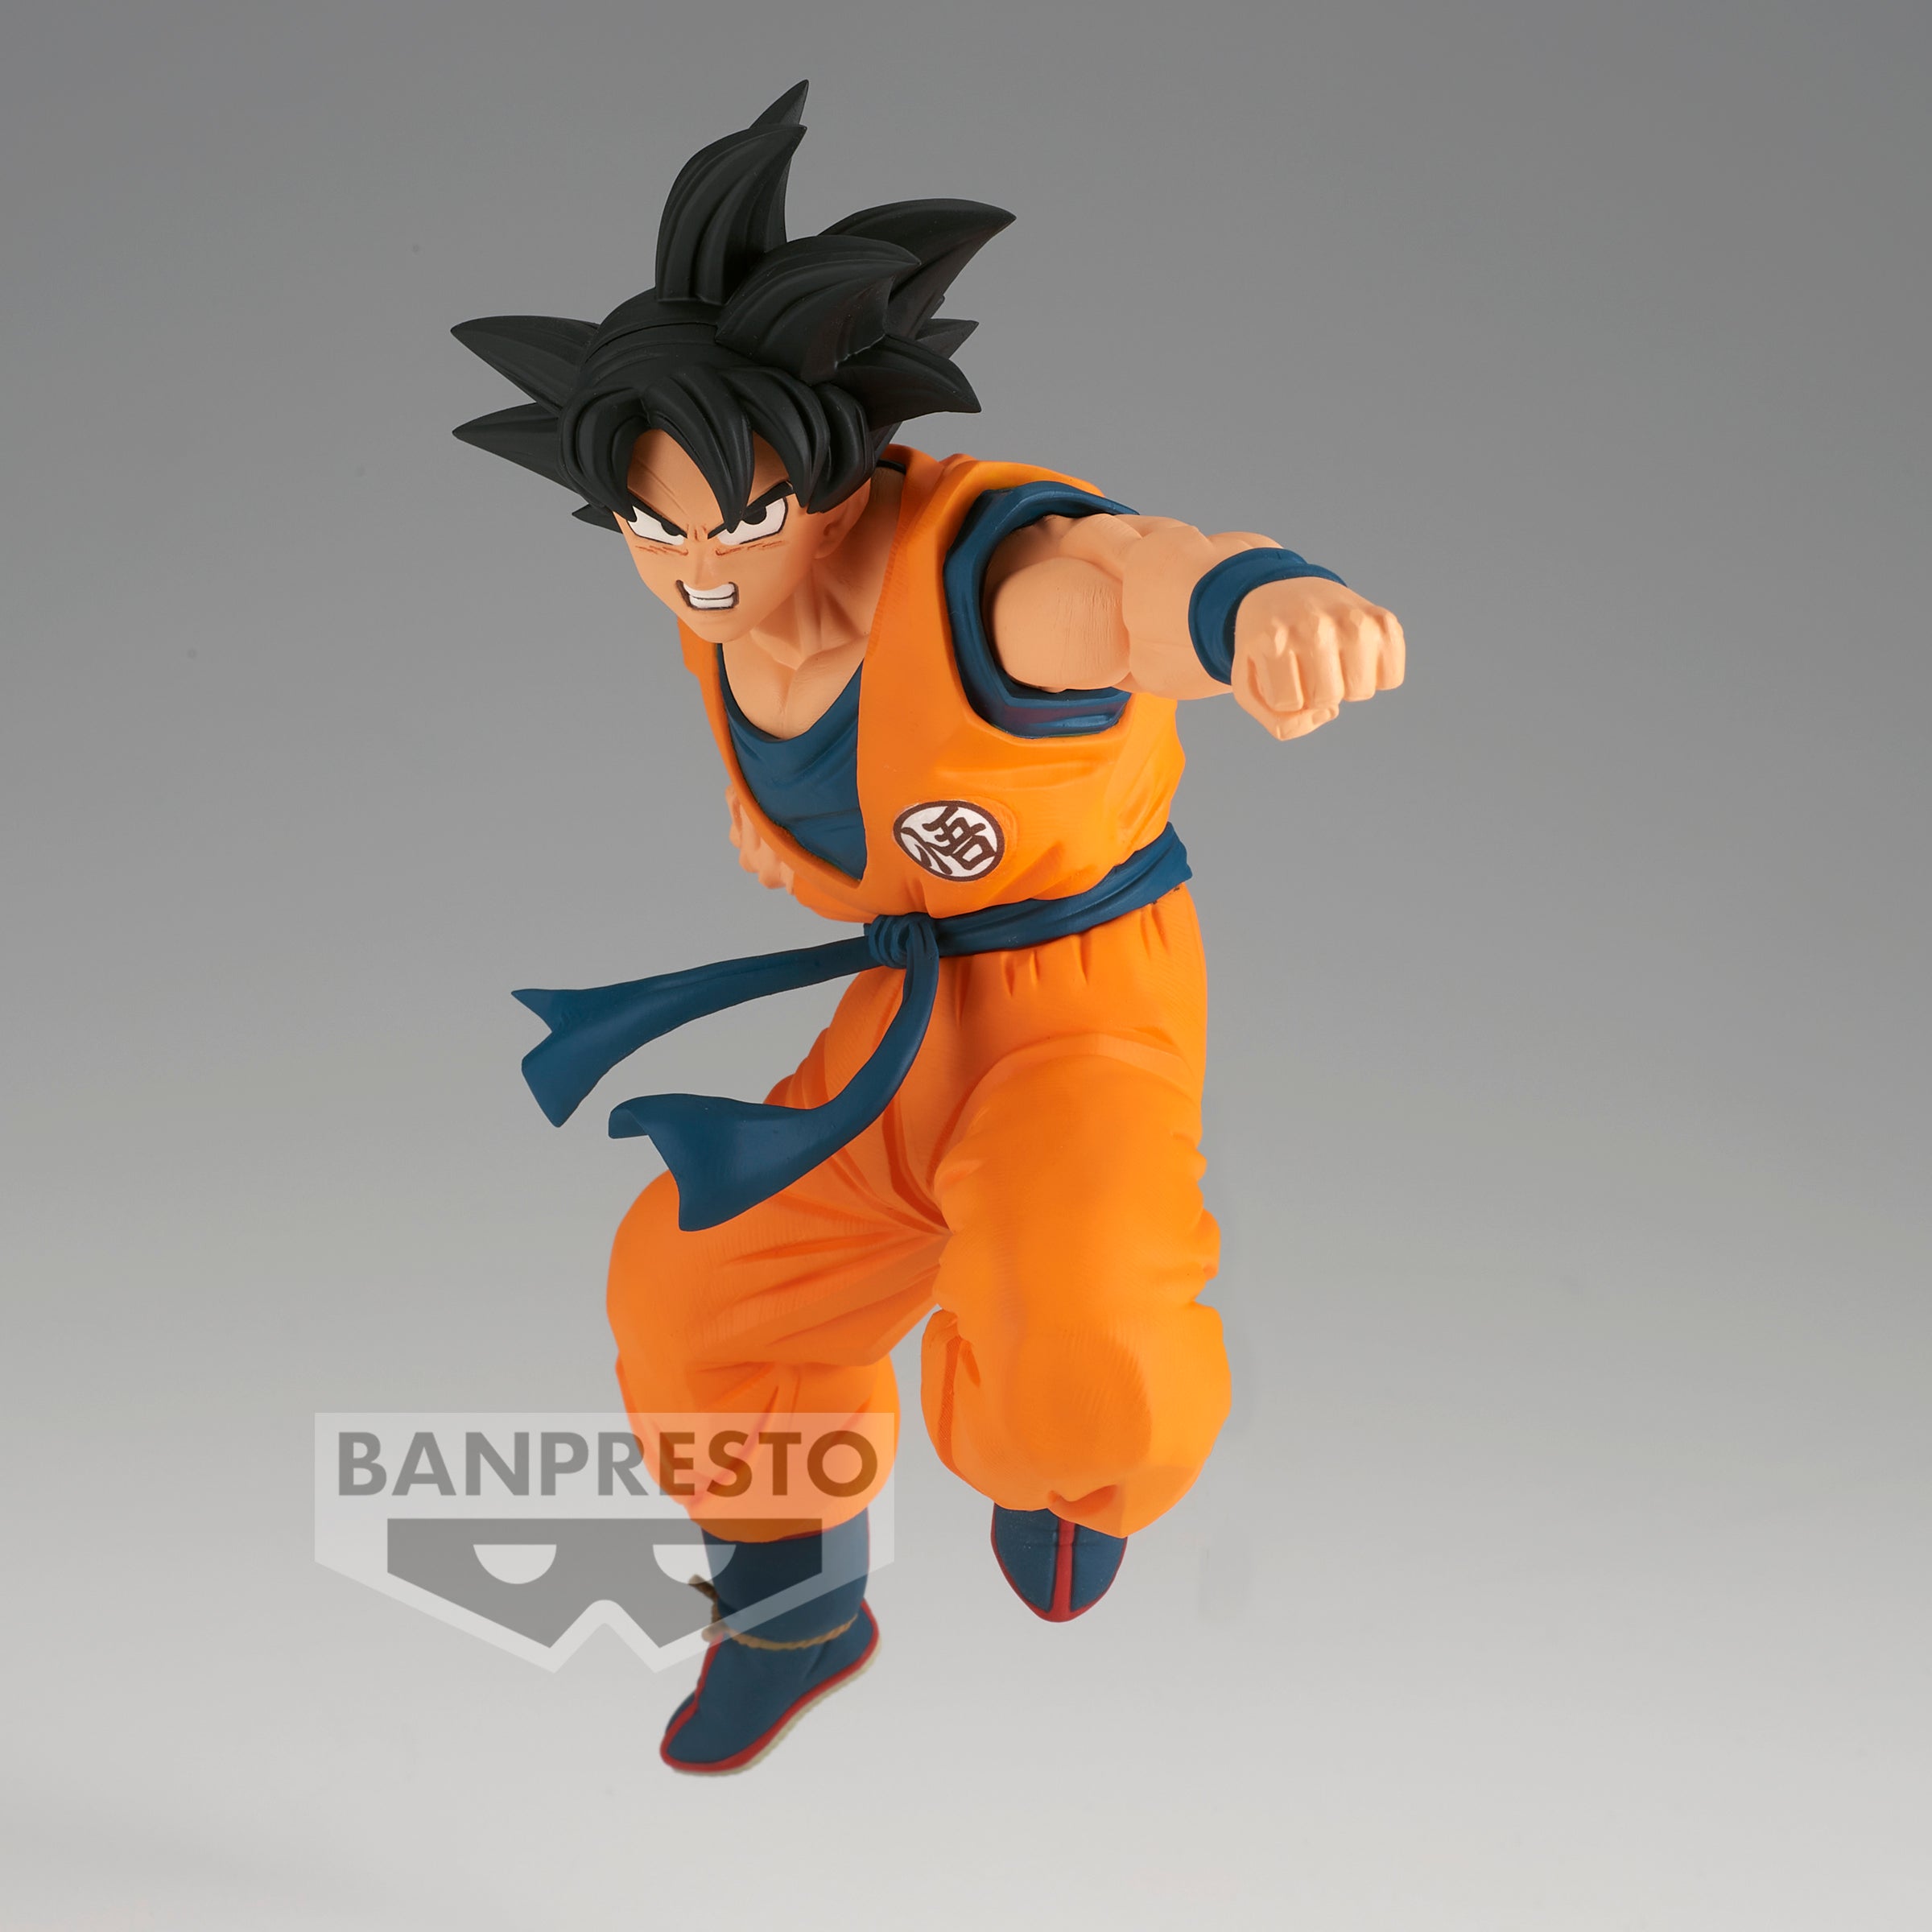 Compre o Action Figure do Goku de Dragon Ball Super da Banpresto